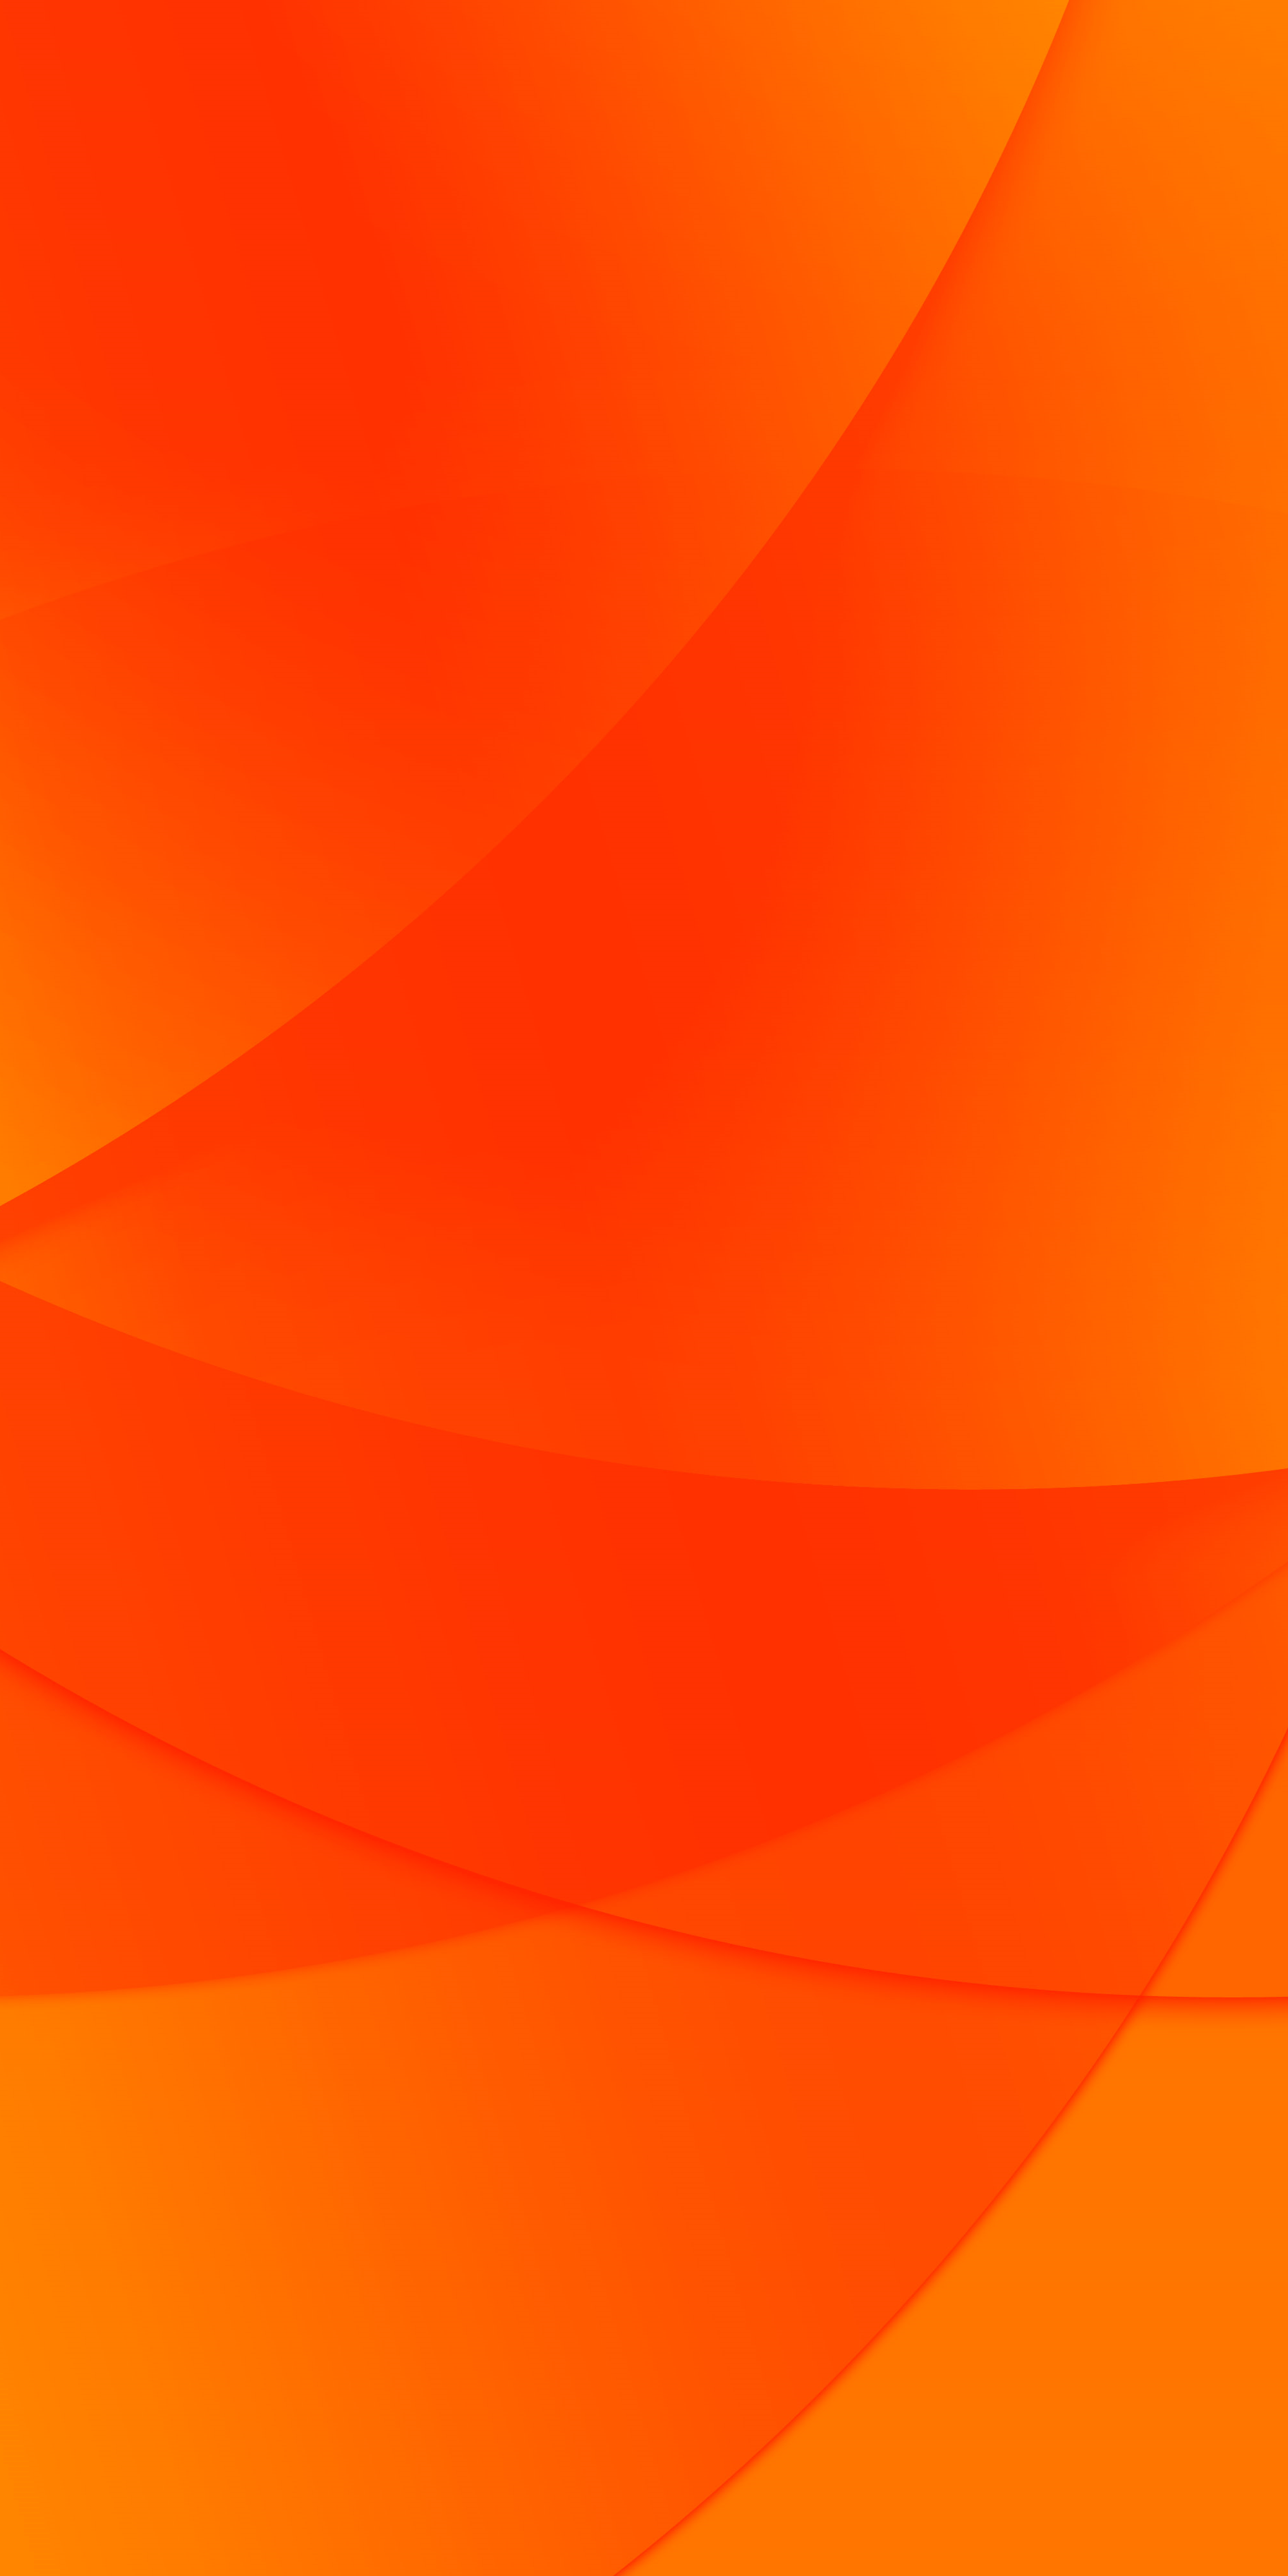 Smart phone wallpaper. Orange wallpaper, iPhone